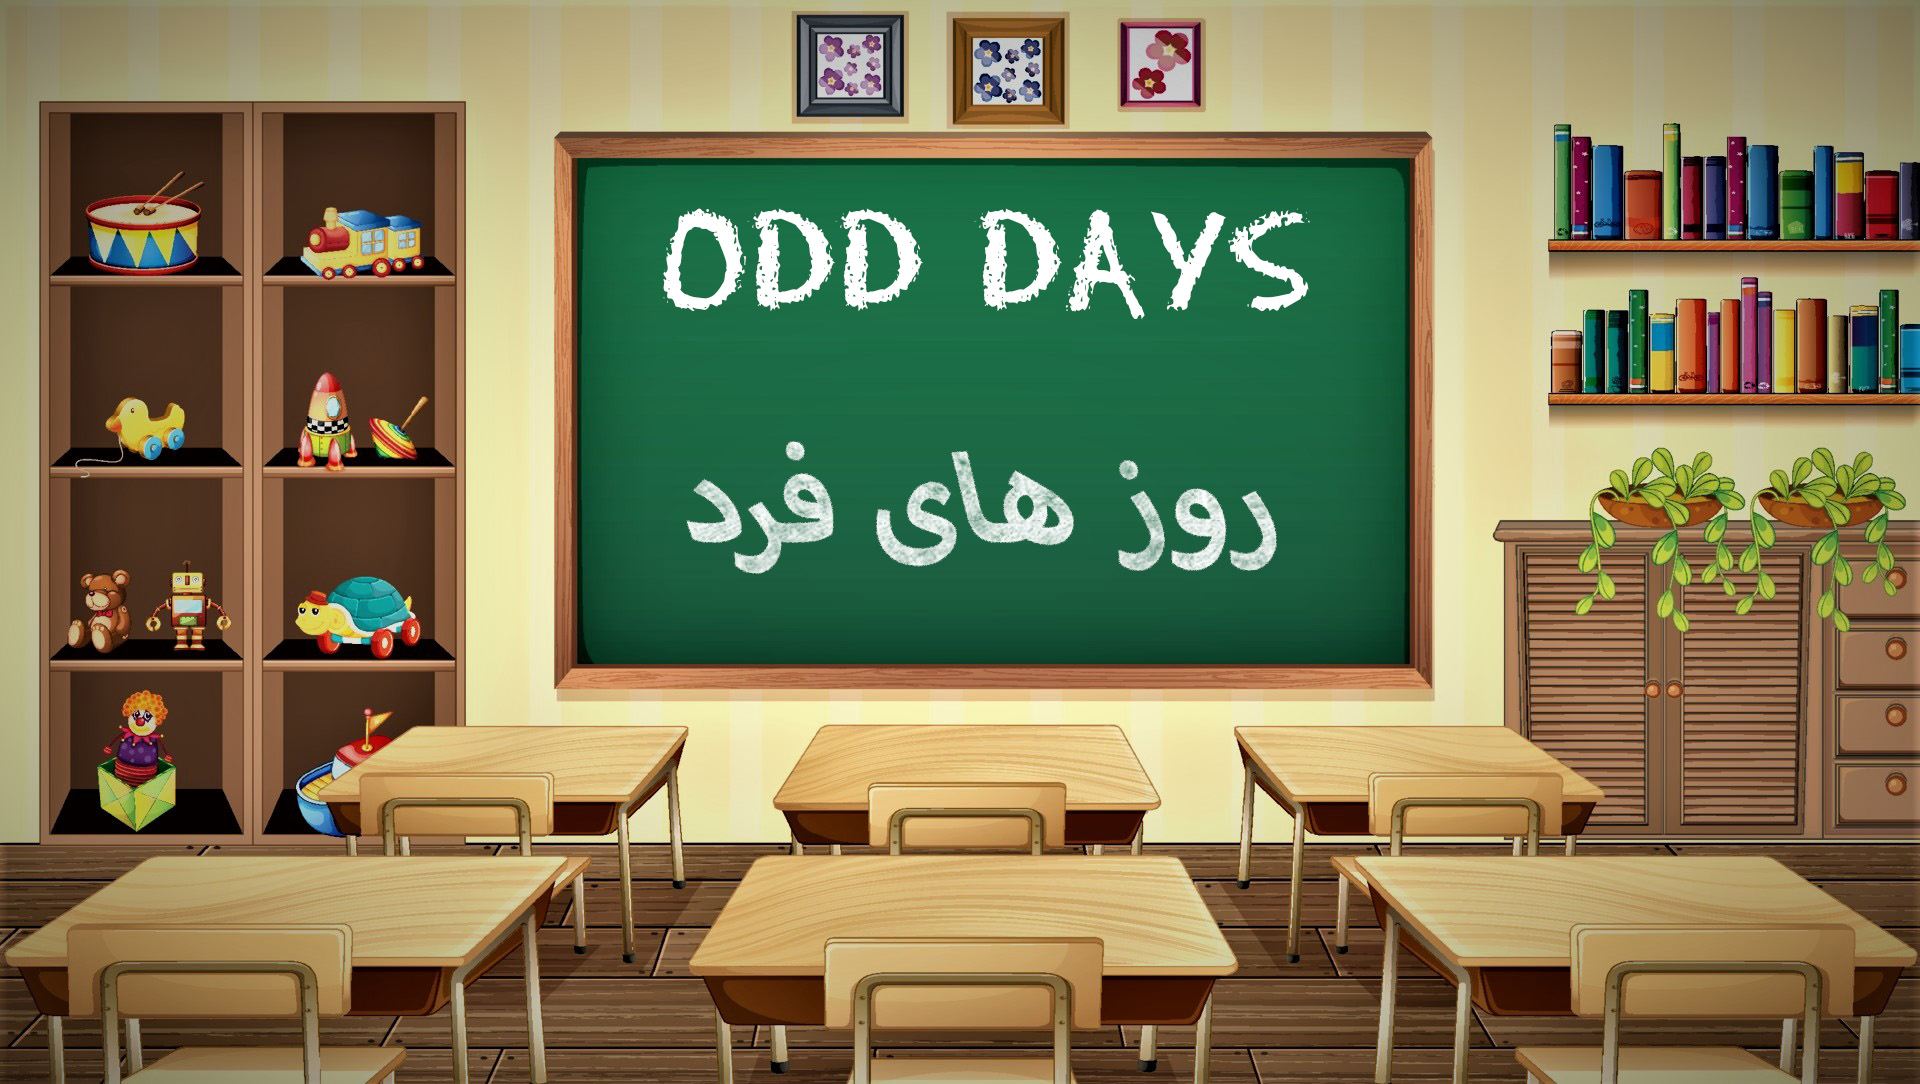 Odd days